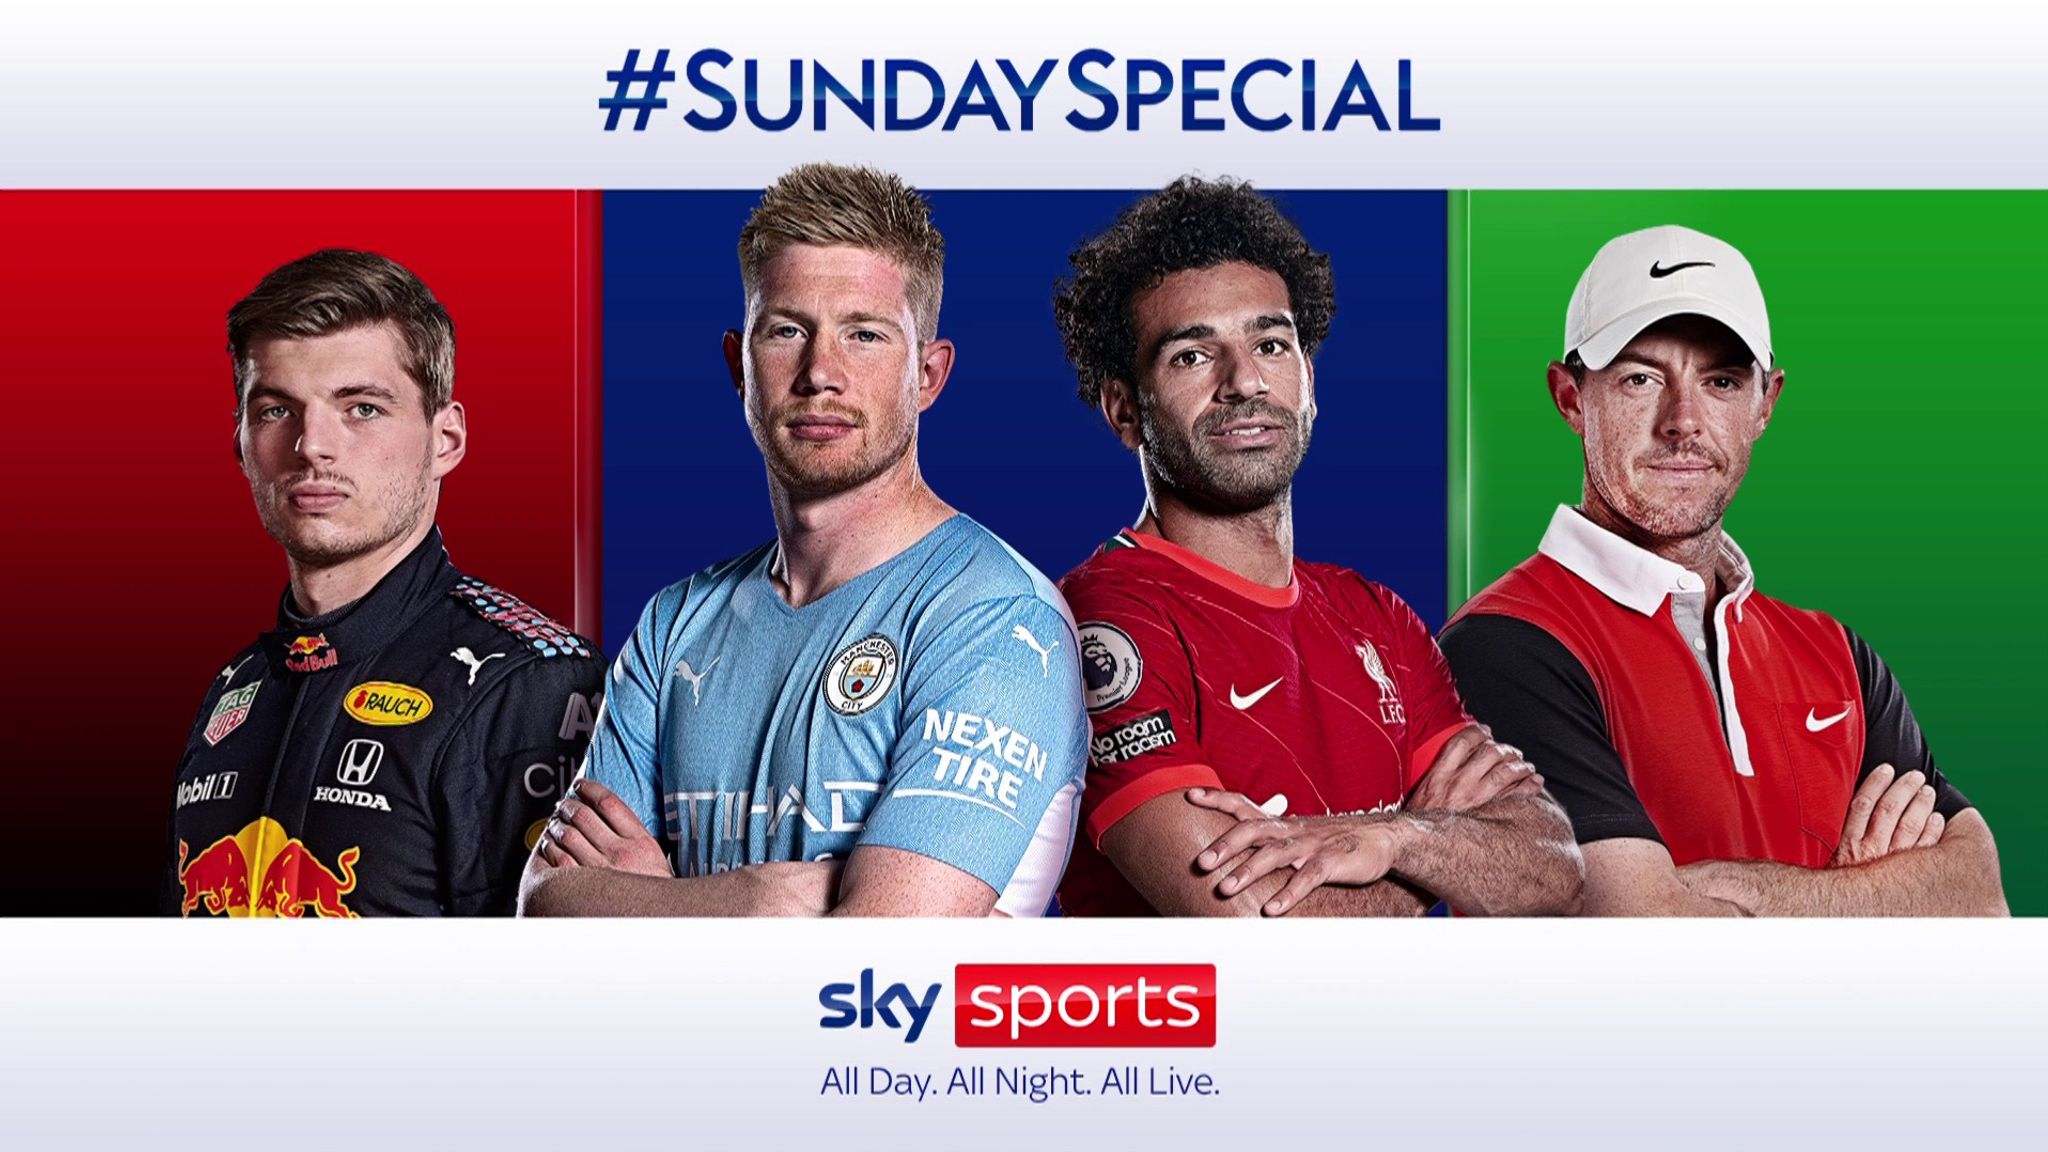 Man City vs Liverpool, The Masters live on Sky Sports Sunday Special following Australian GP start News News Sky Sports